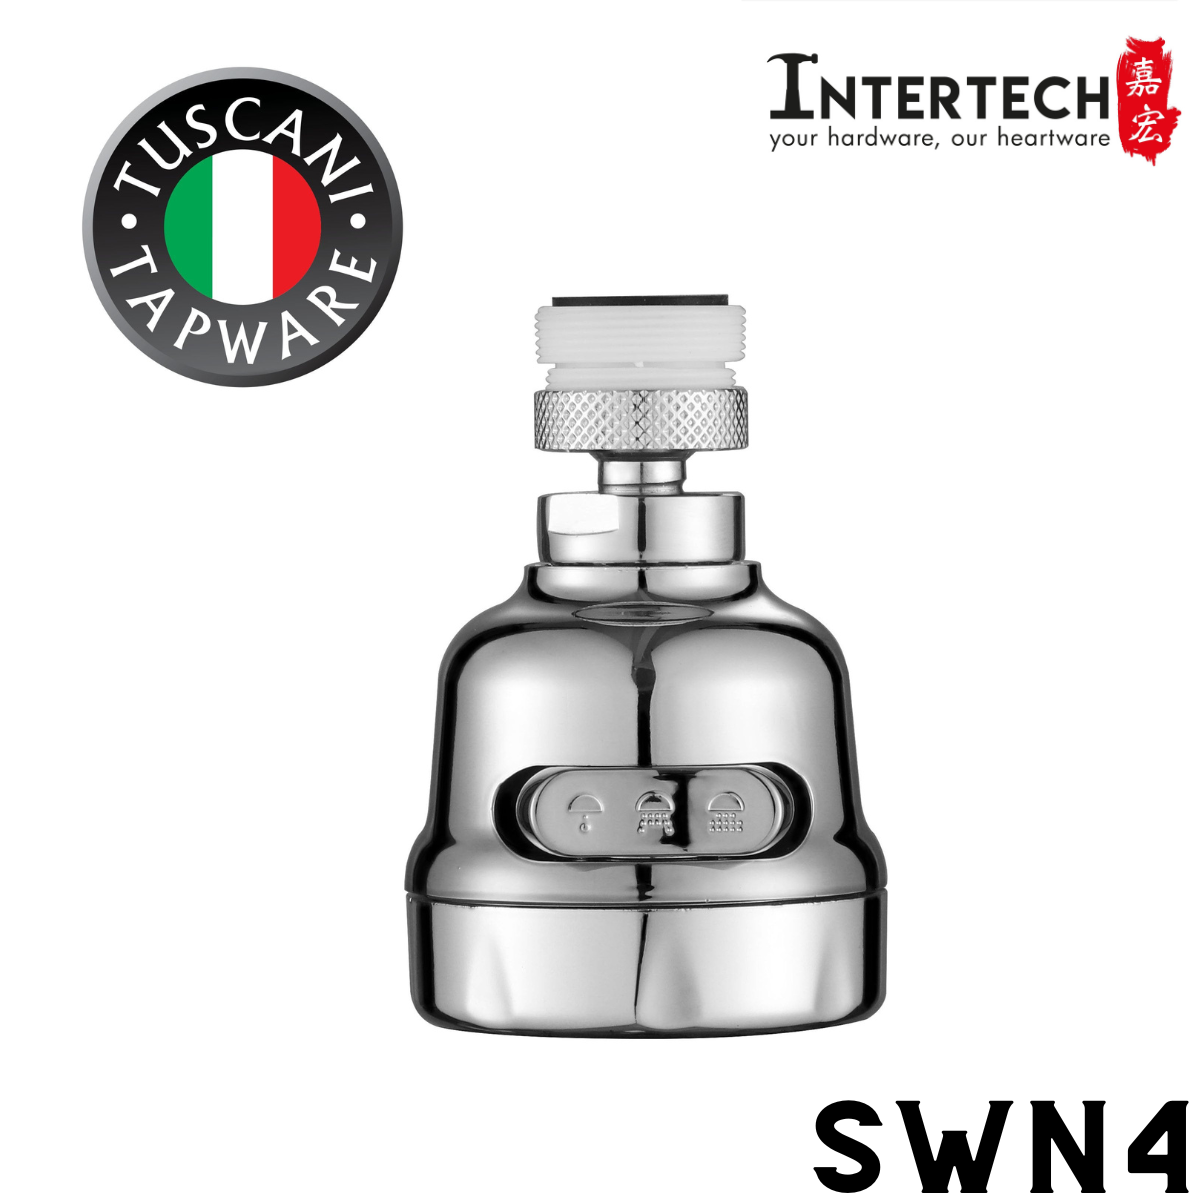 Tuscani Tapware SWN4 - Water Saving Device ***